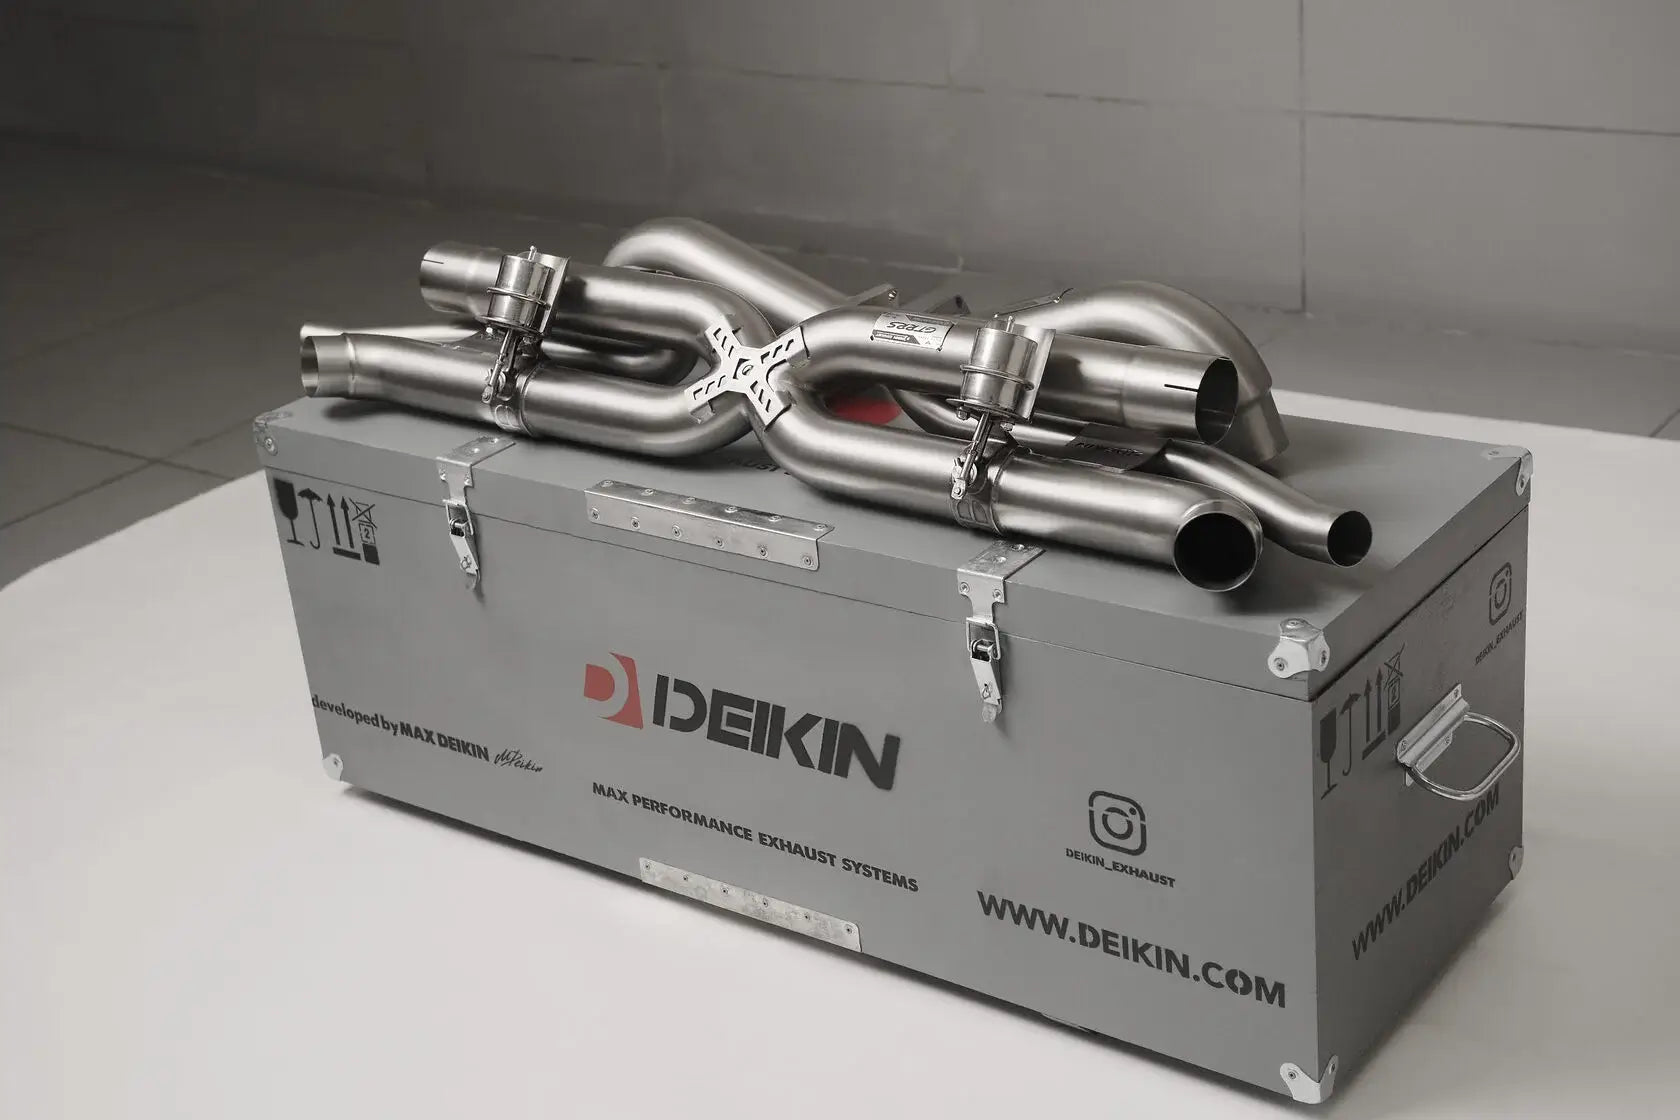 DEIKIN 10-PO.911.T/TS.992.R-ES-Ti-00 Titanium RACE Ver. Exhaust System for Porsche 911 Turbo/Turbo S (992) Photo-14 